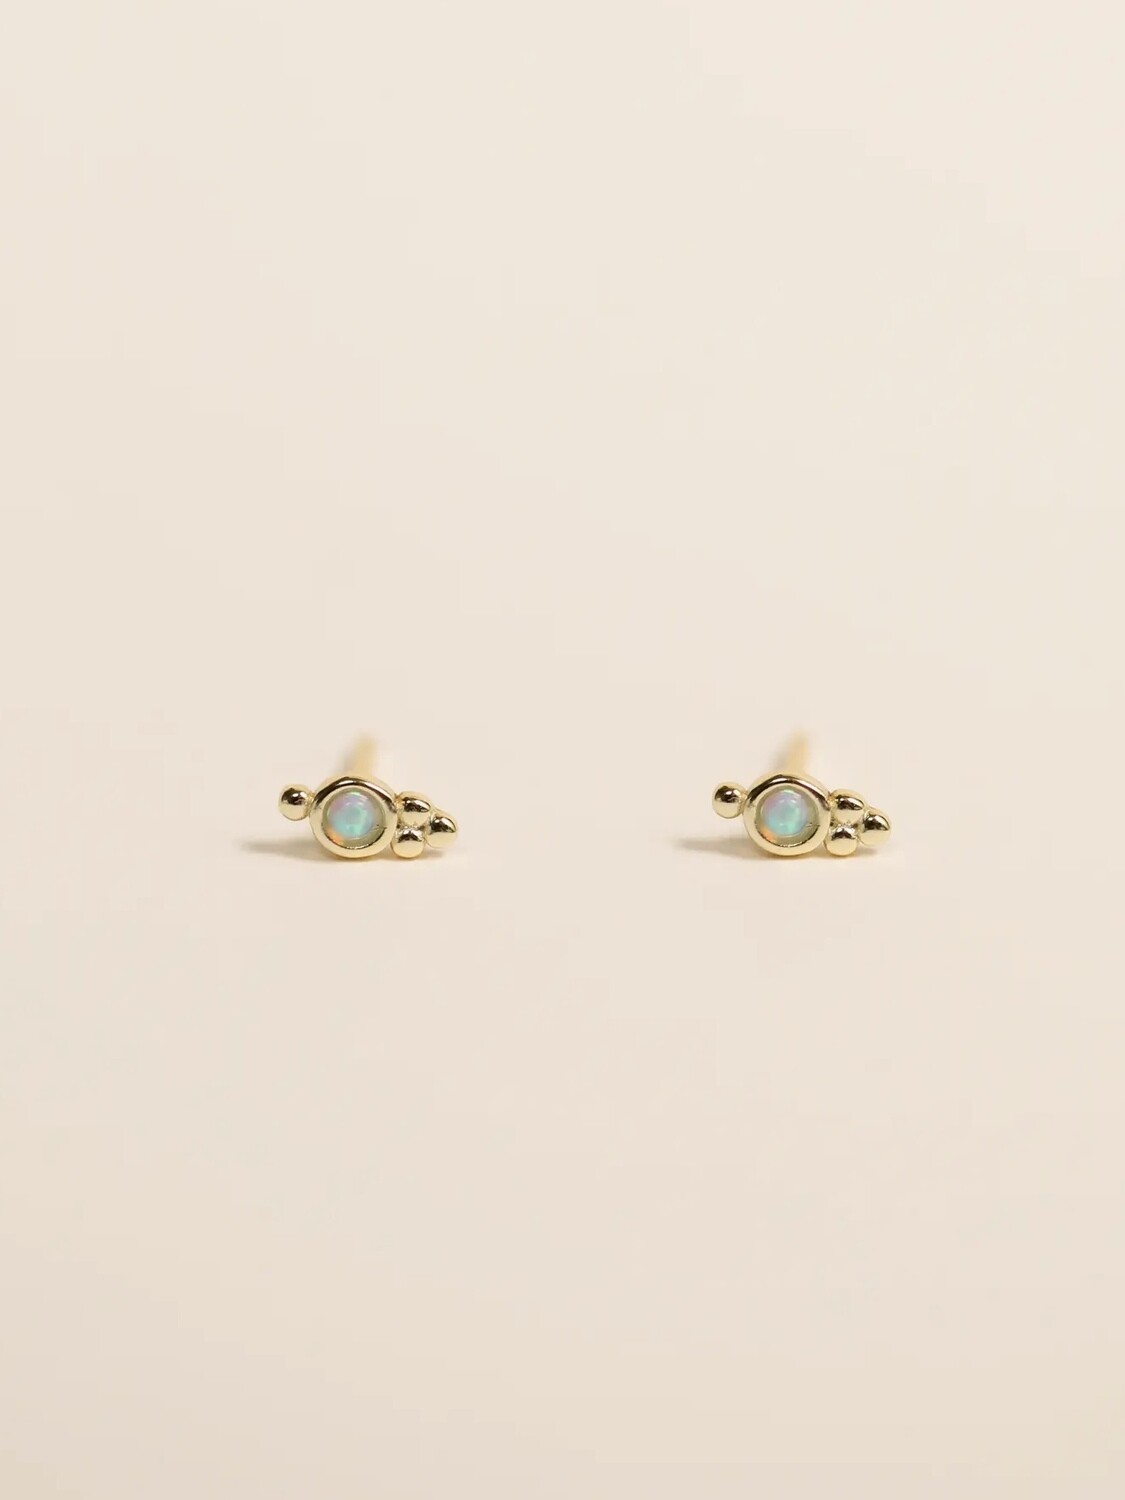 Fire Opalescent Tri Ball Post Earrings in 14kt Gold Over Sterling Silver - JK99